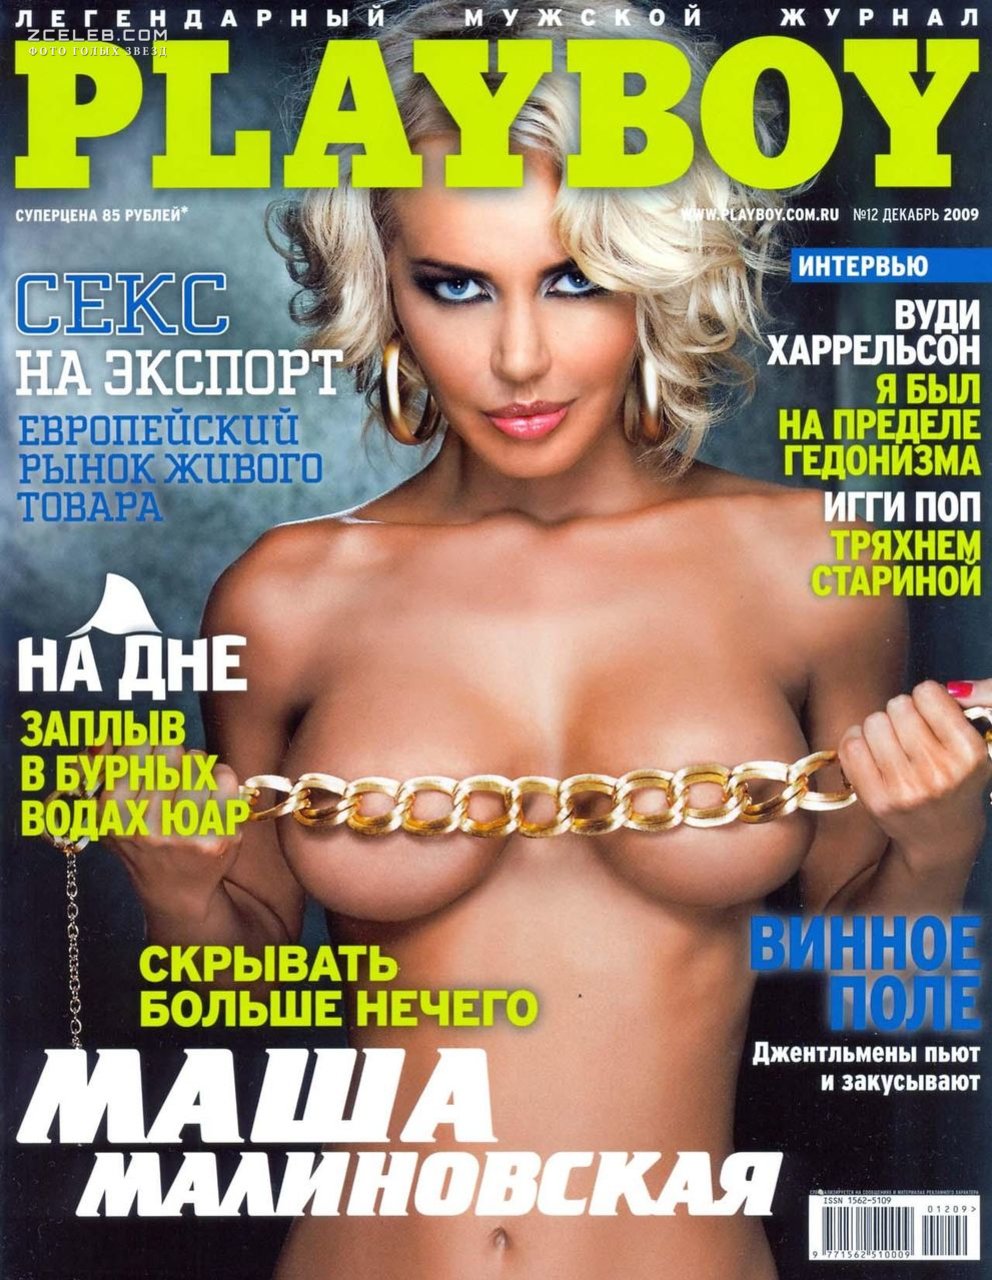 Обнаженная Маша Малиновская в журнале Playboy, 2009.